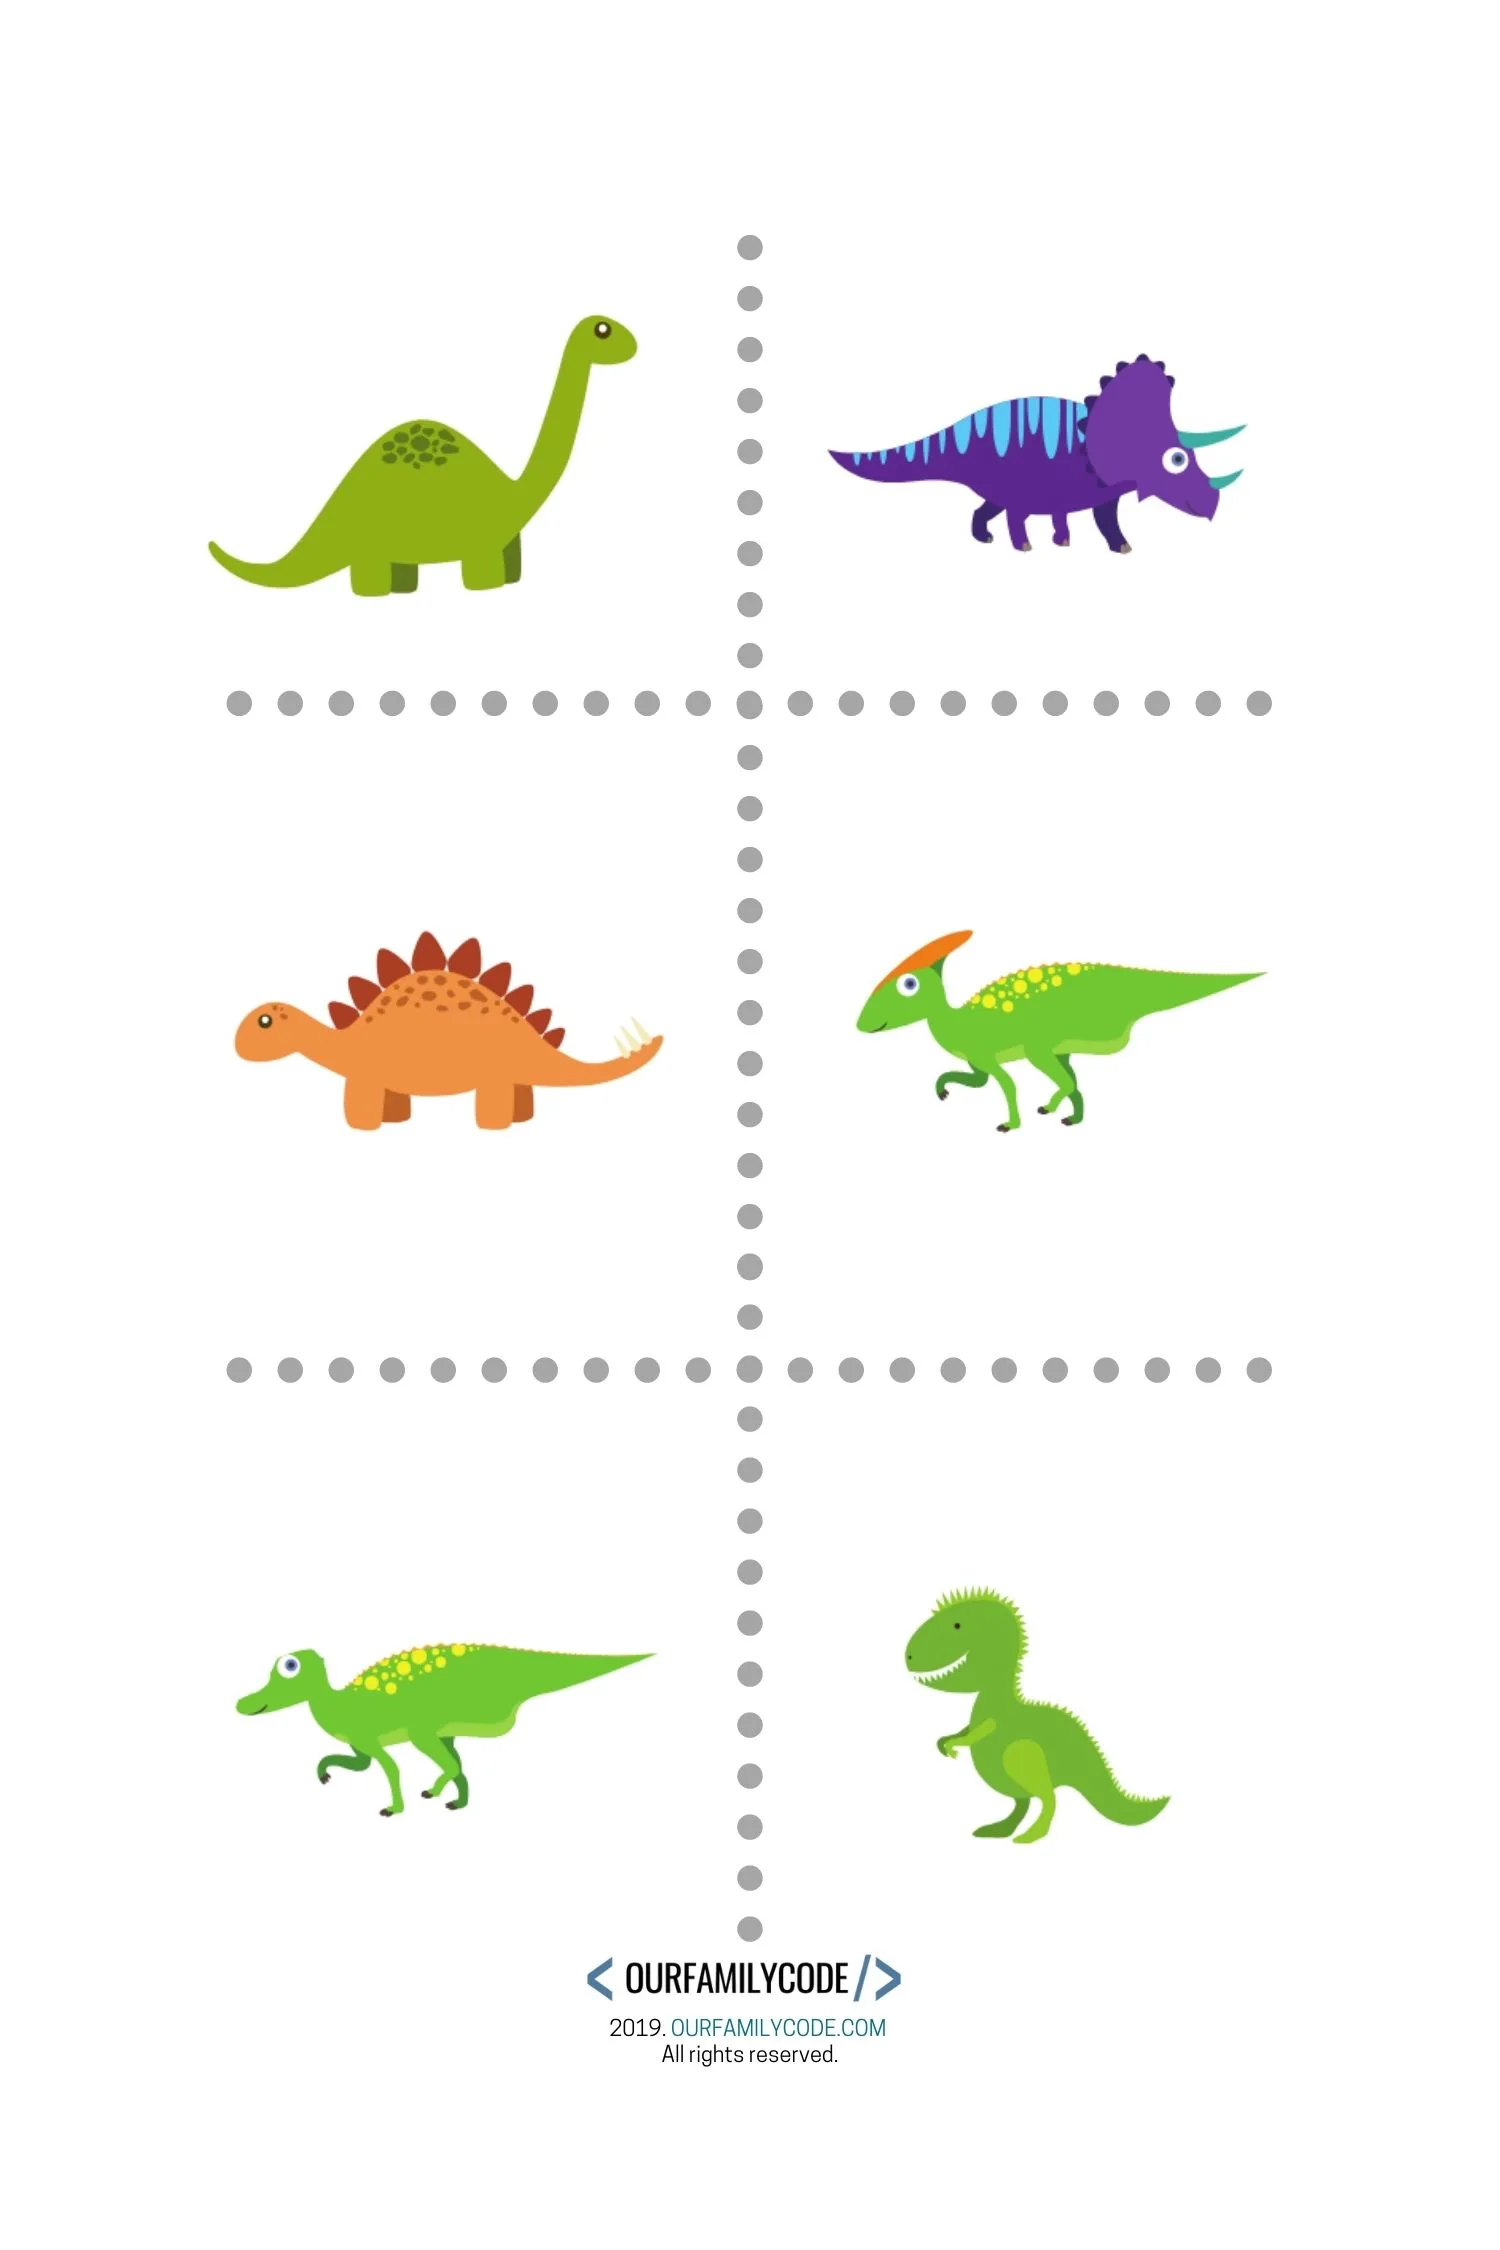 deciphering dinosaurs greek and latin dinosaur word activity dinosaur cards